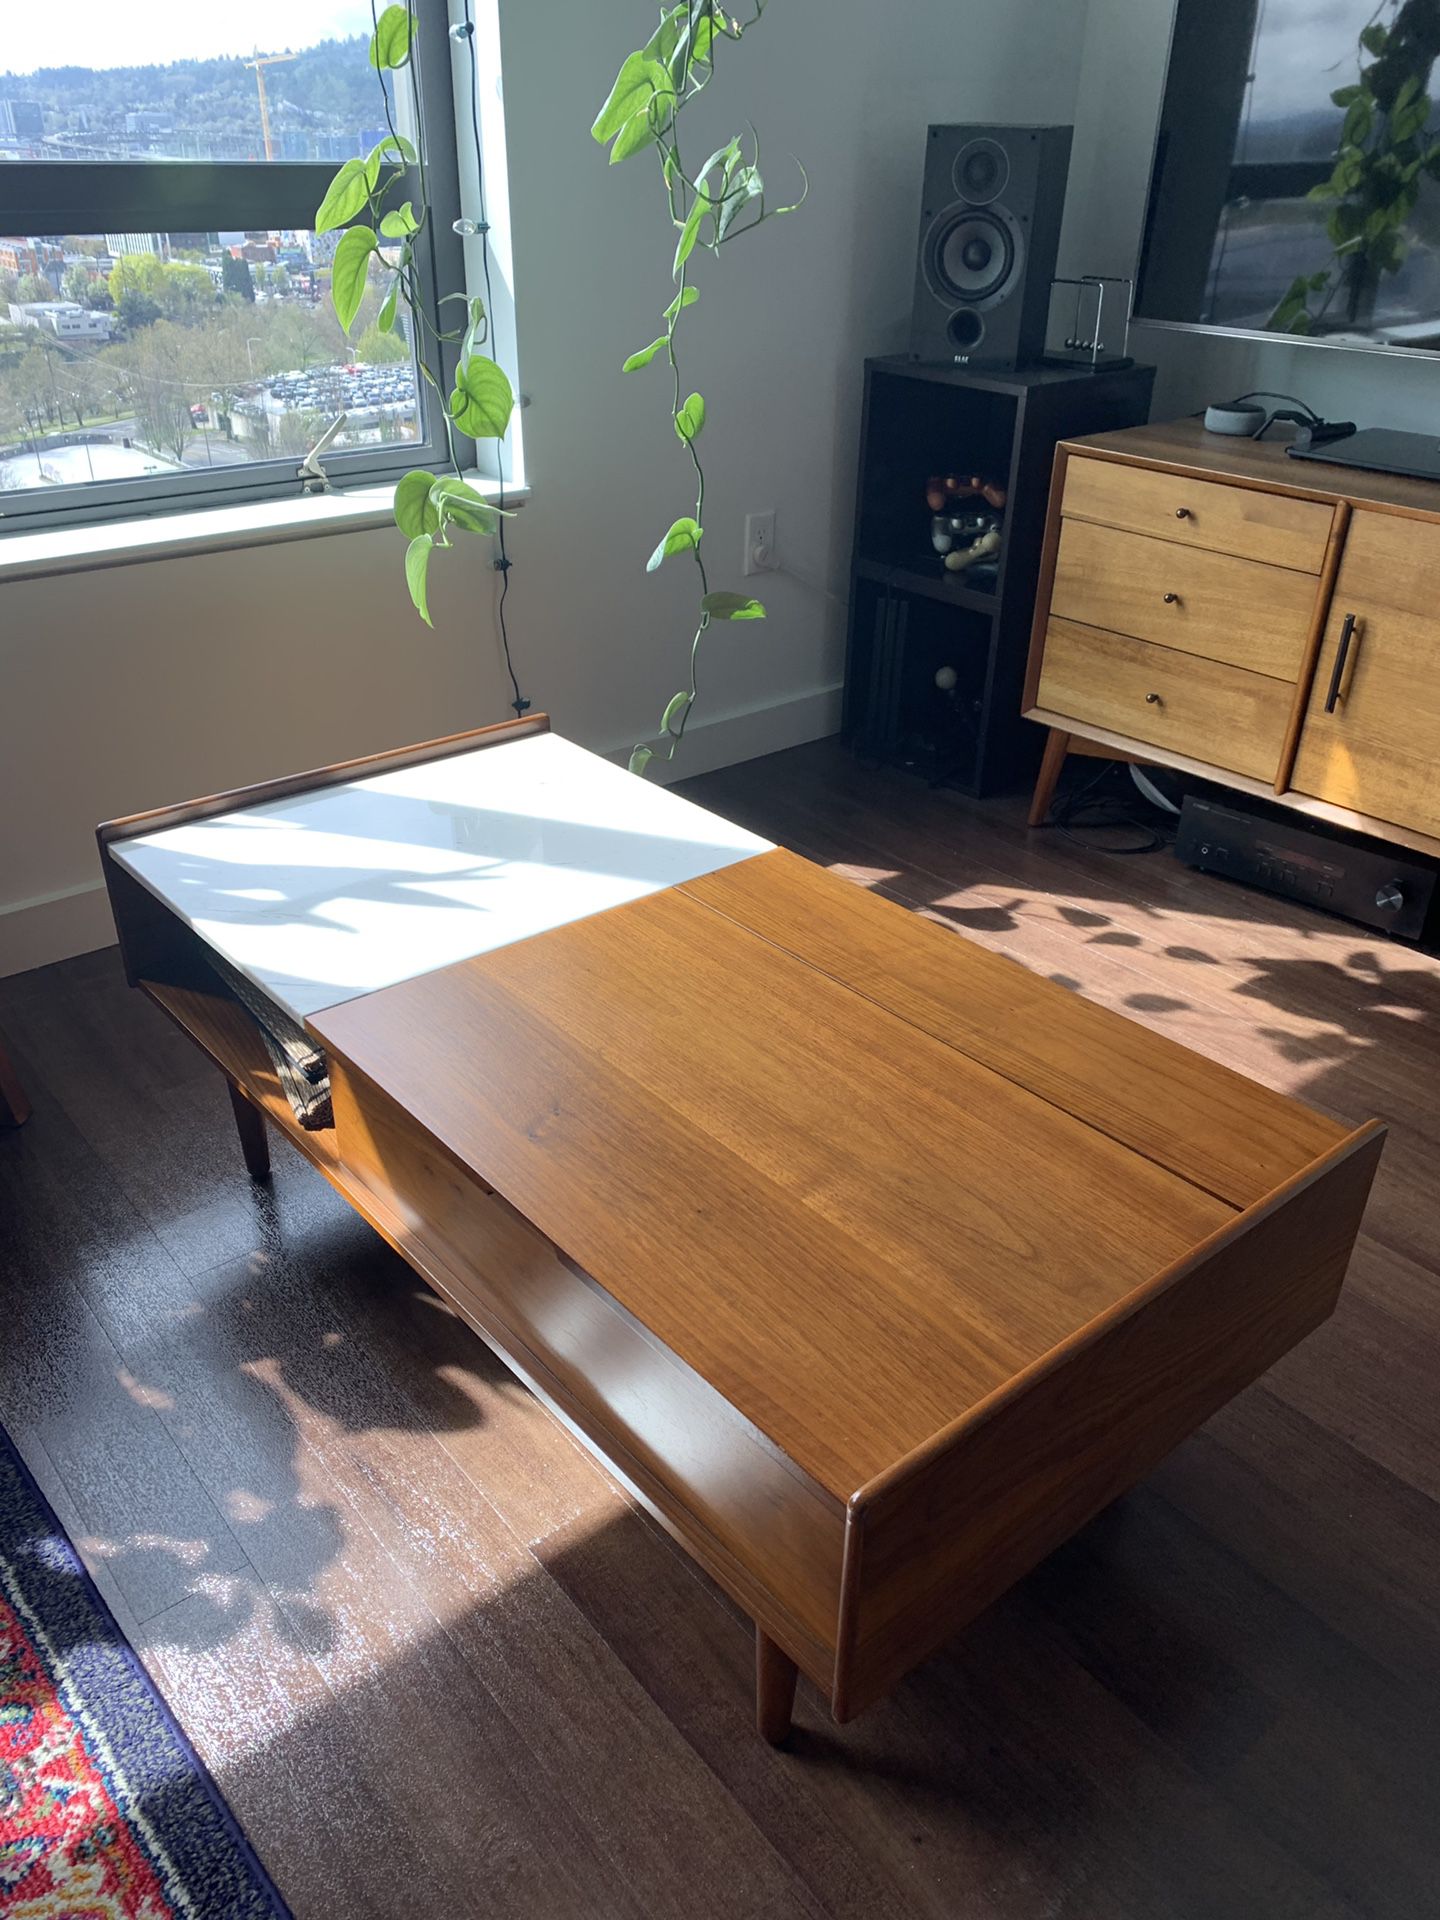 West elm pop-up coffee table (mid century modern)